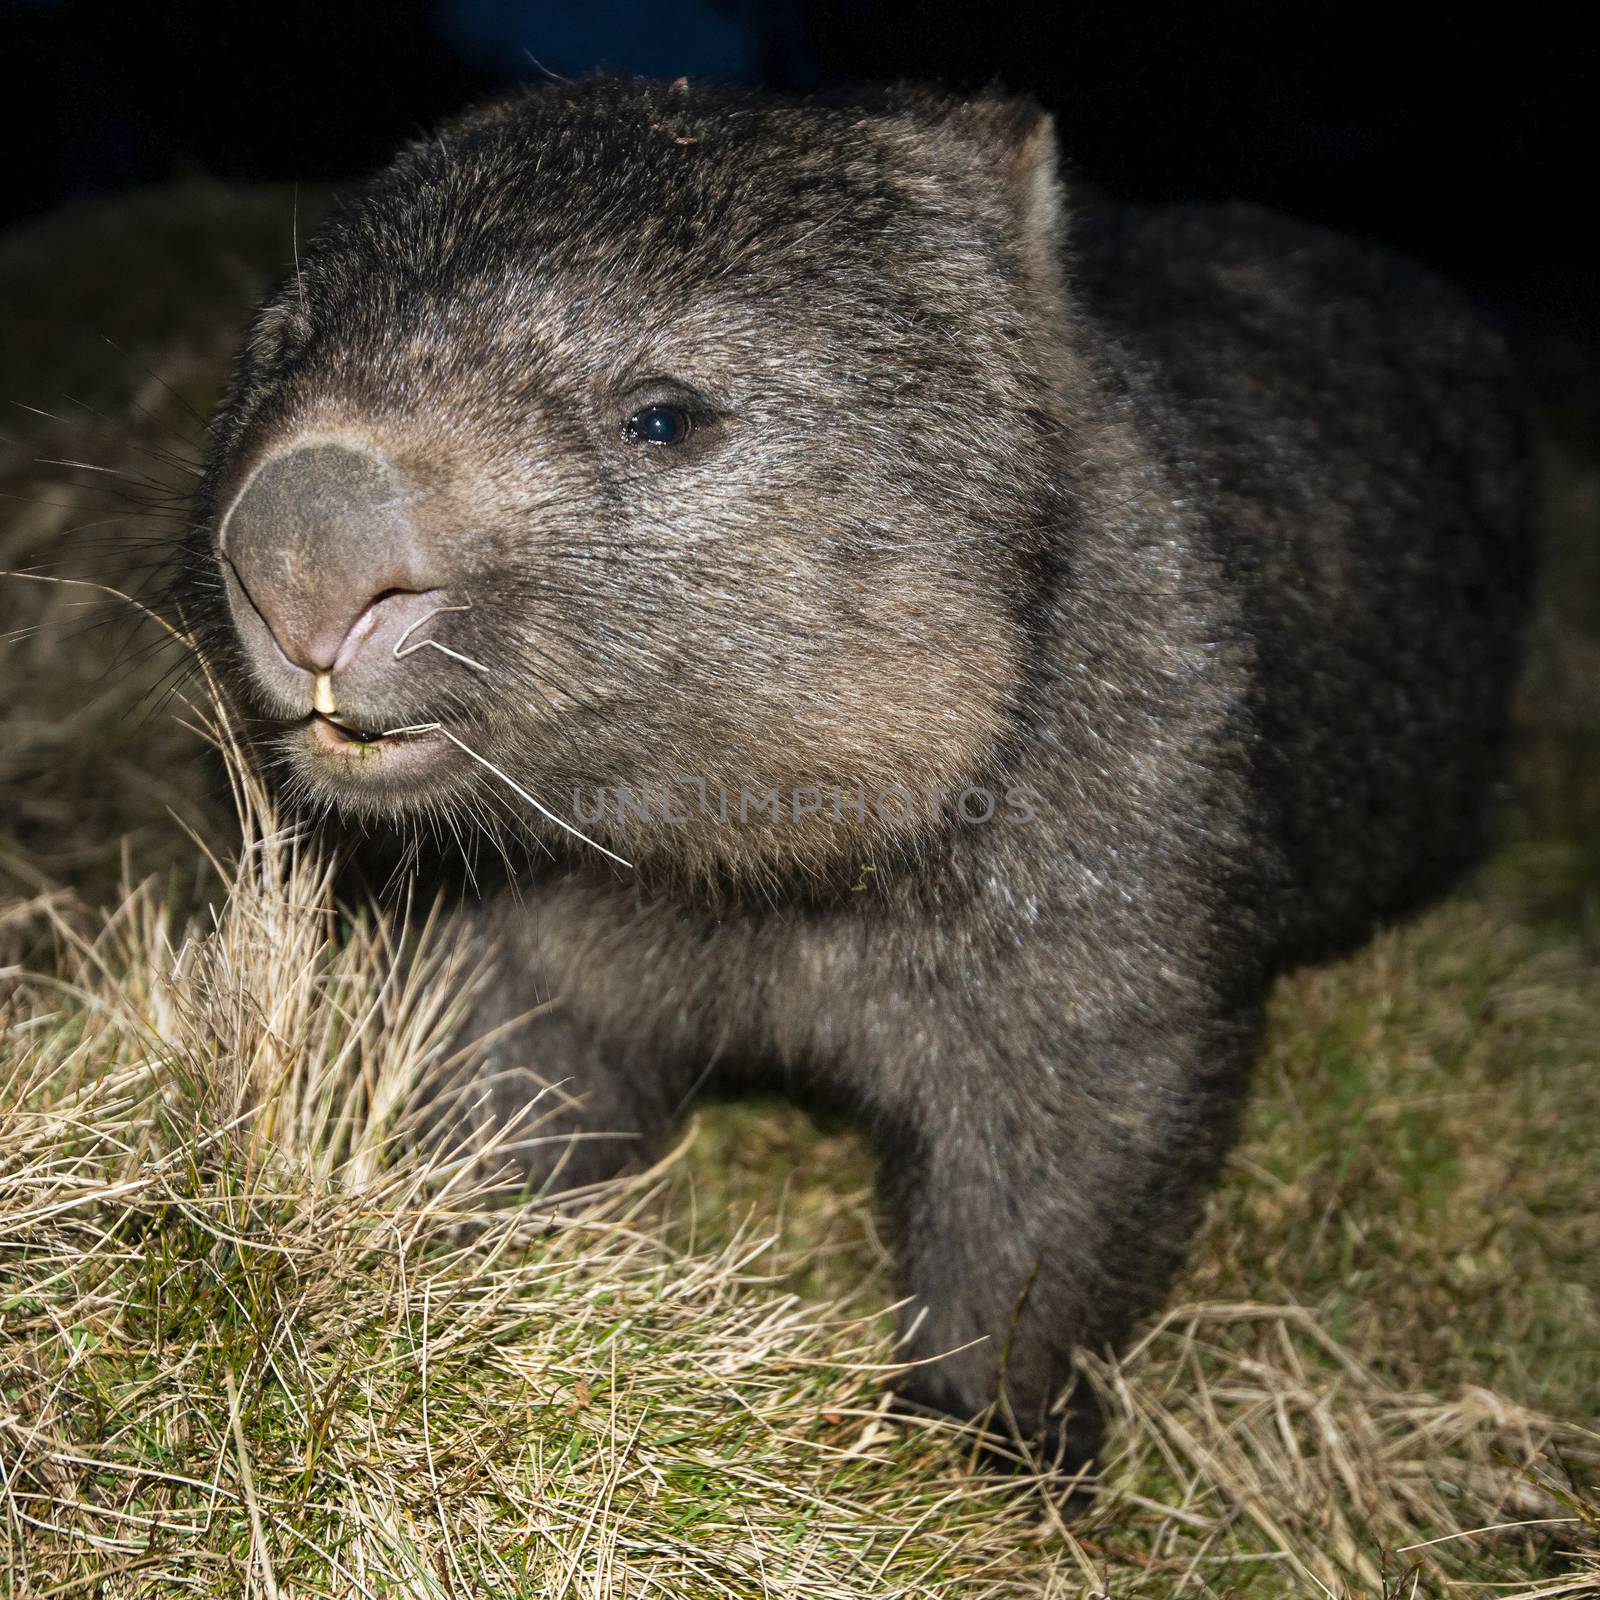 Large Australian wombat found outside at night.